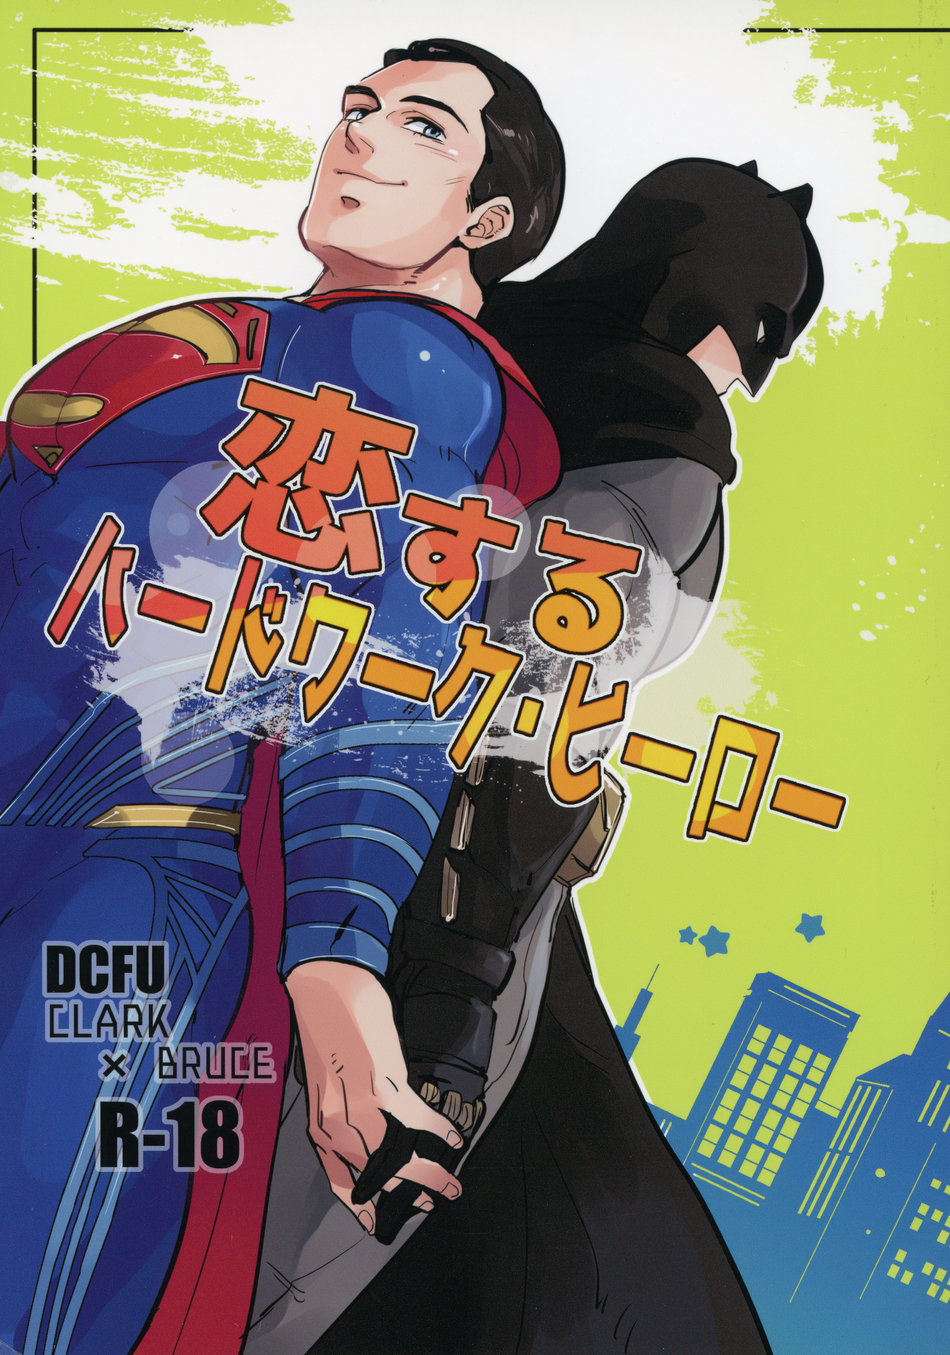 Umesyu うめしゅ DC Comics Koisuru Hard Work Hero 恋する ハードワーク・ヒーロー Superman Clark Kent x Batman Bruce Wayne